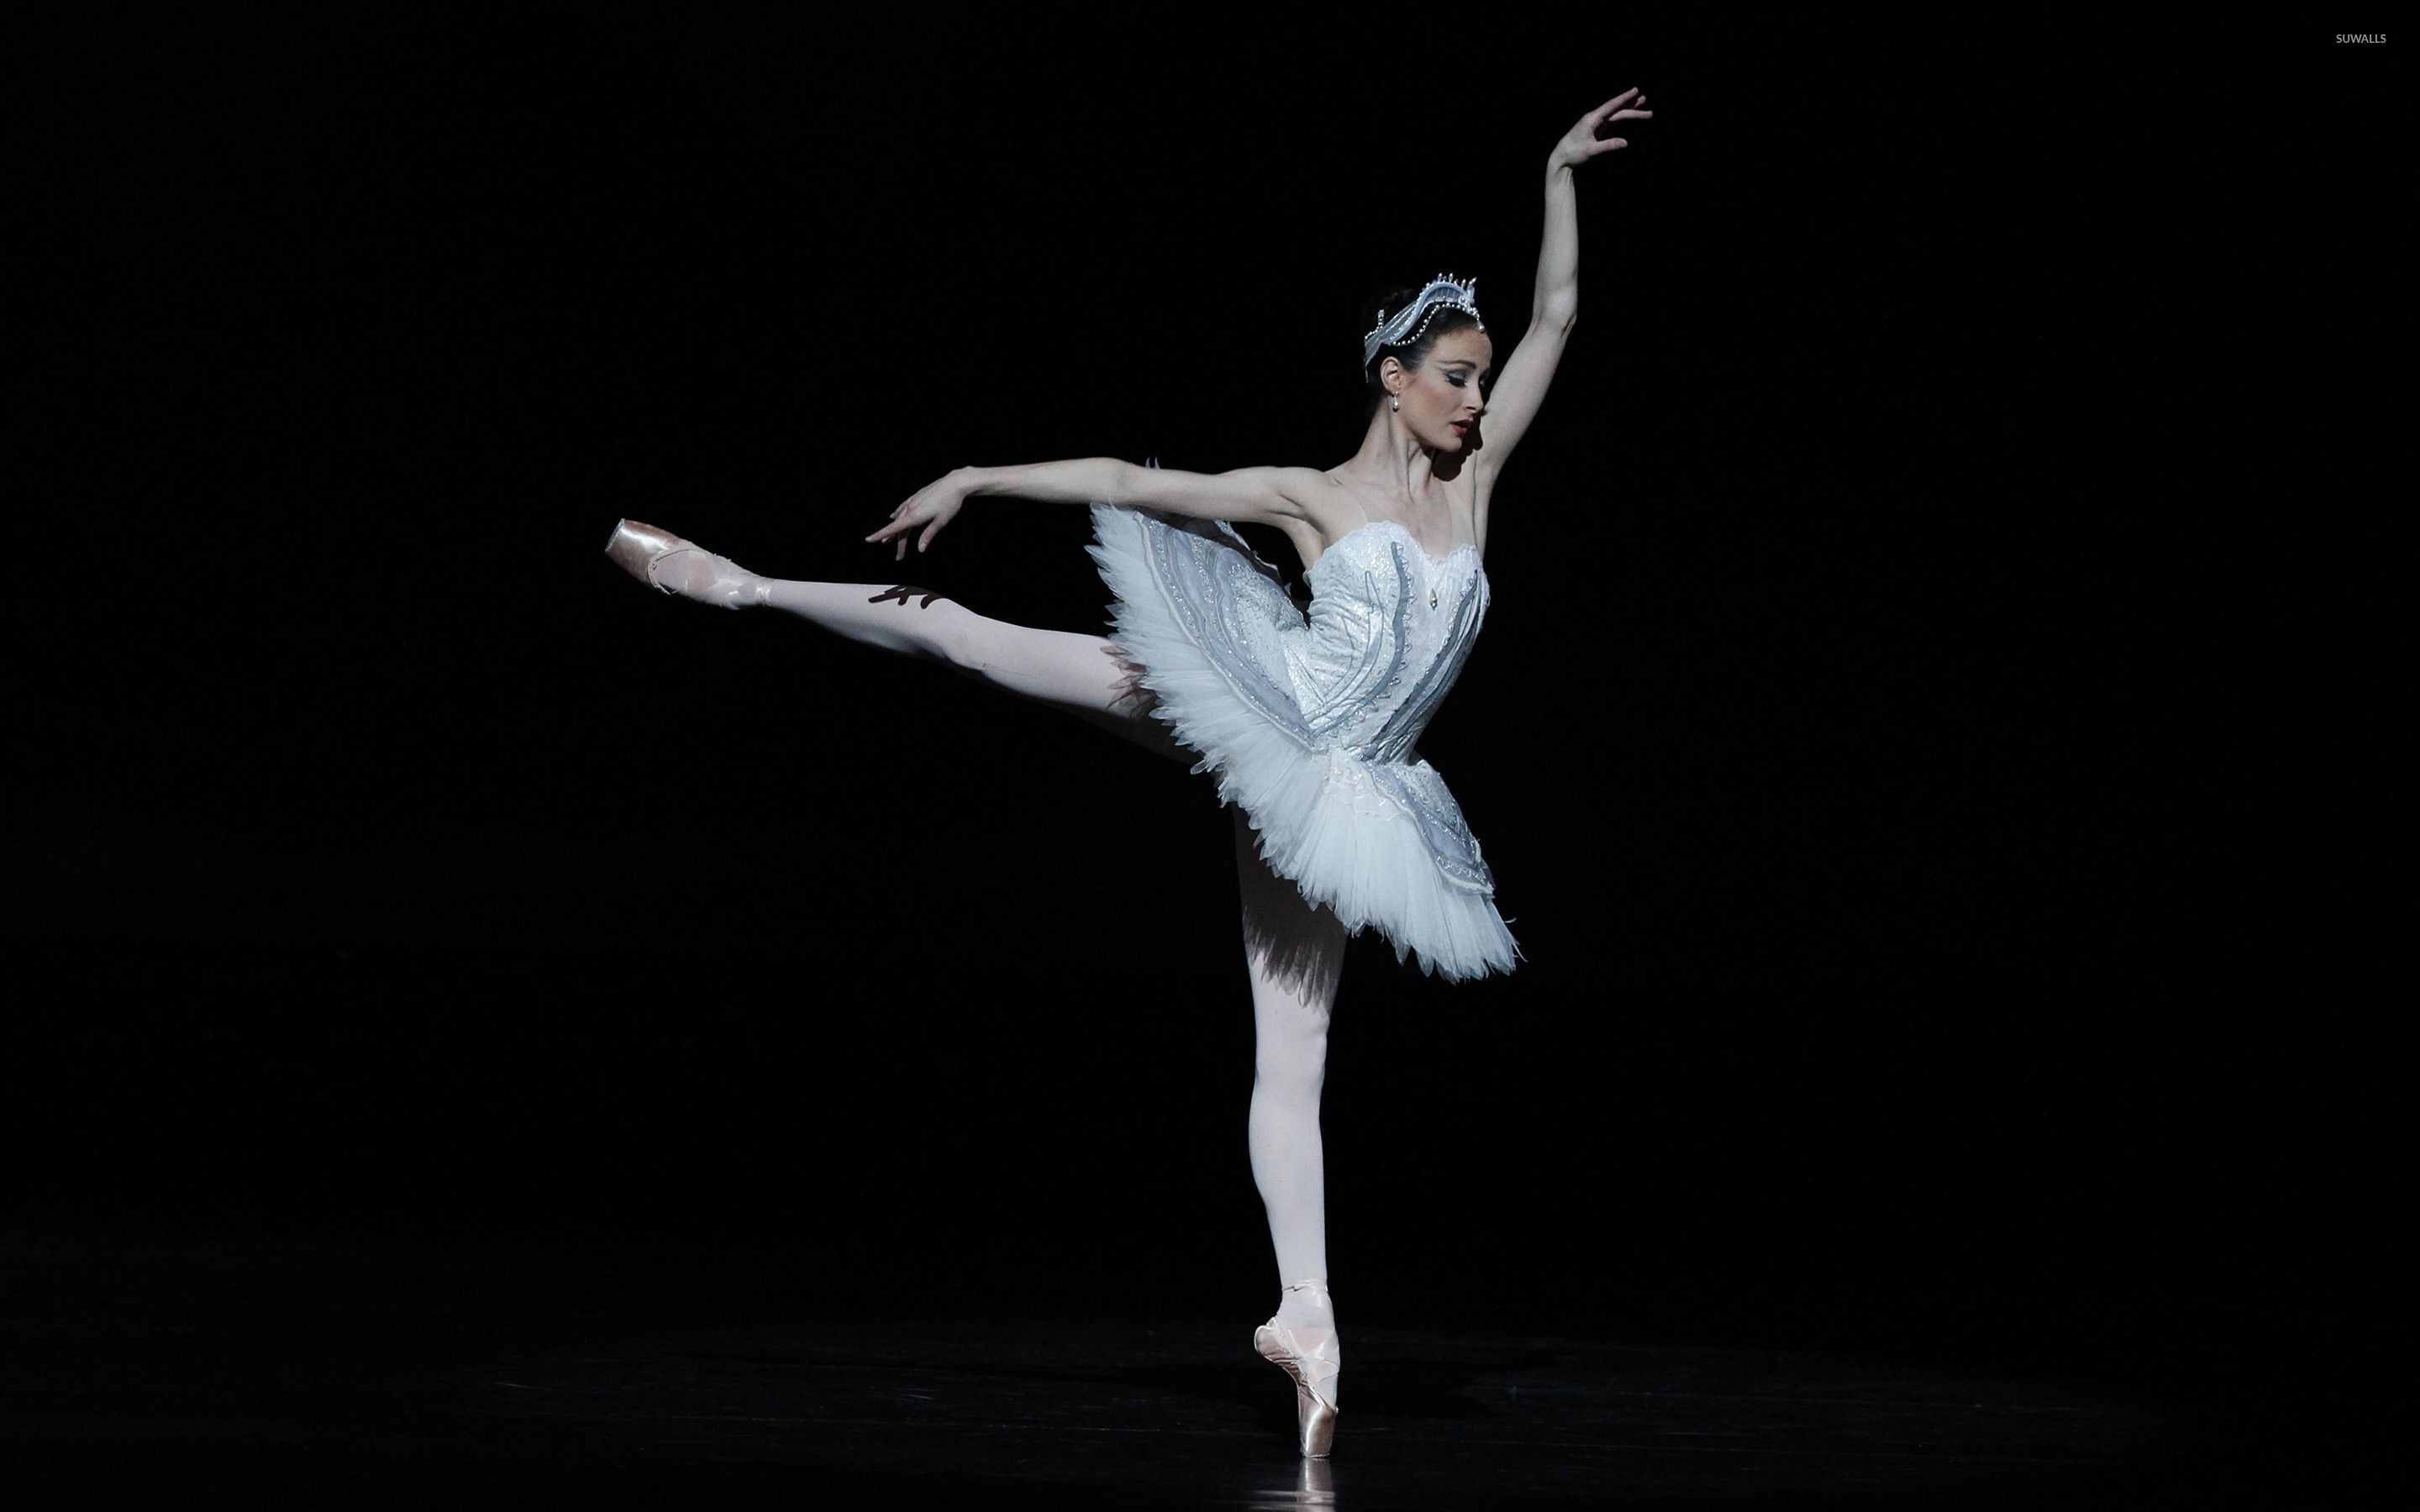 Ballerina in a white dress on stage - Ballet